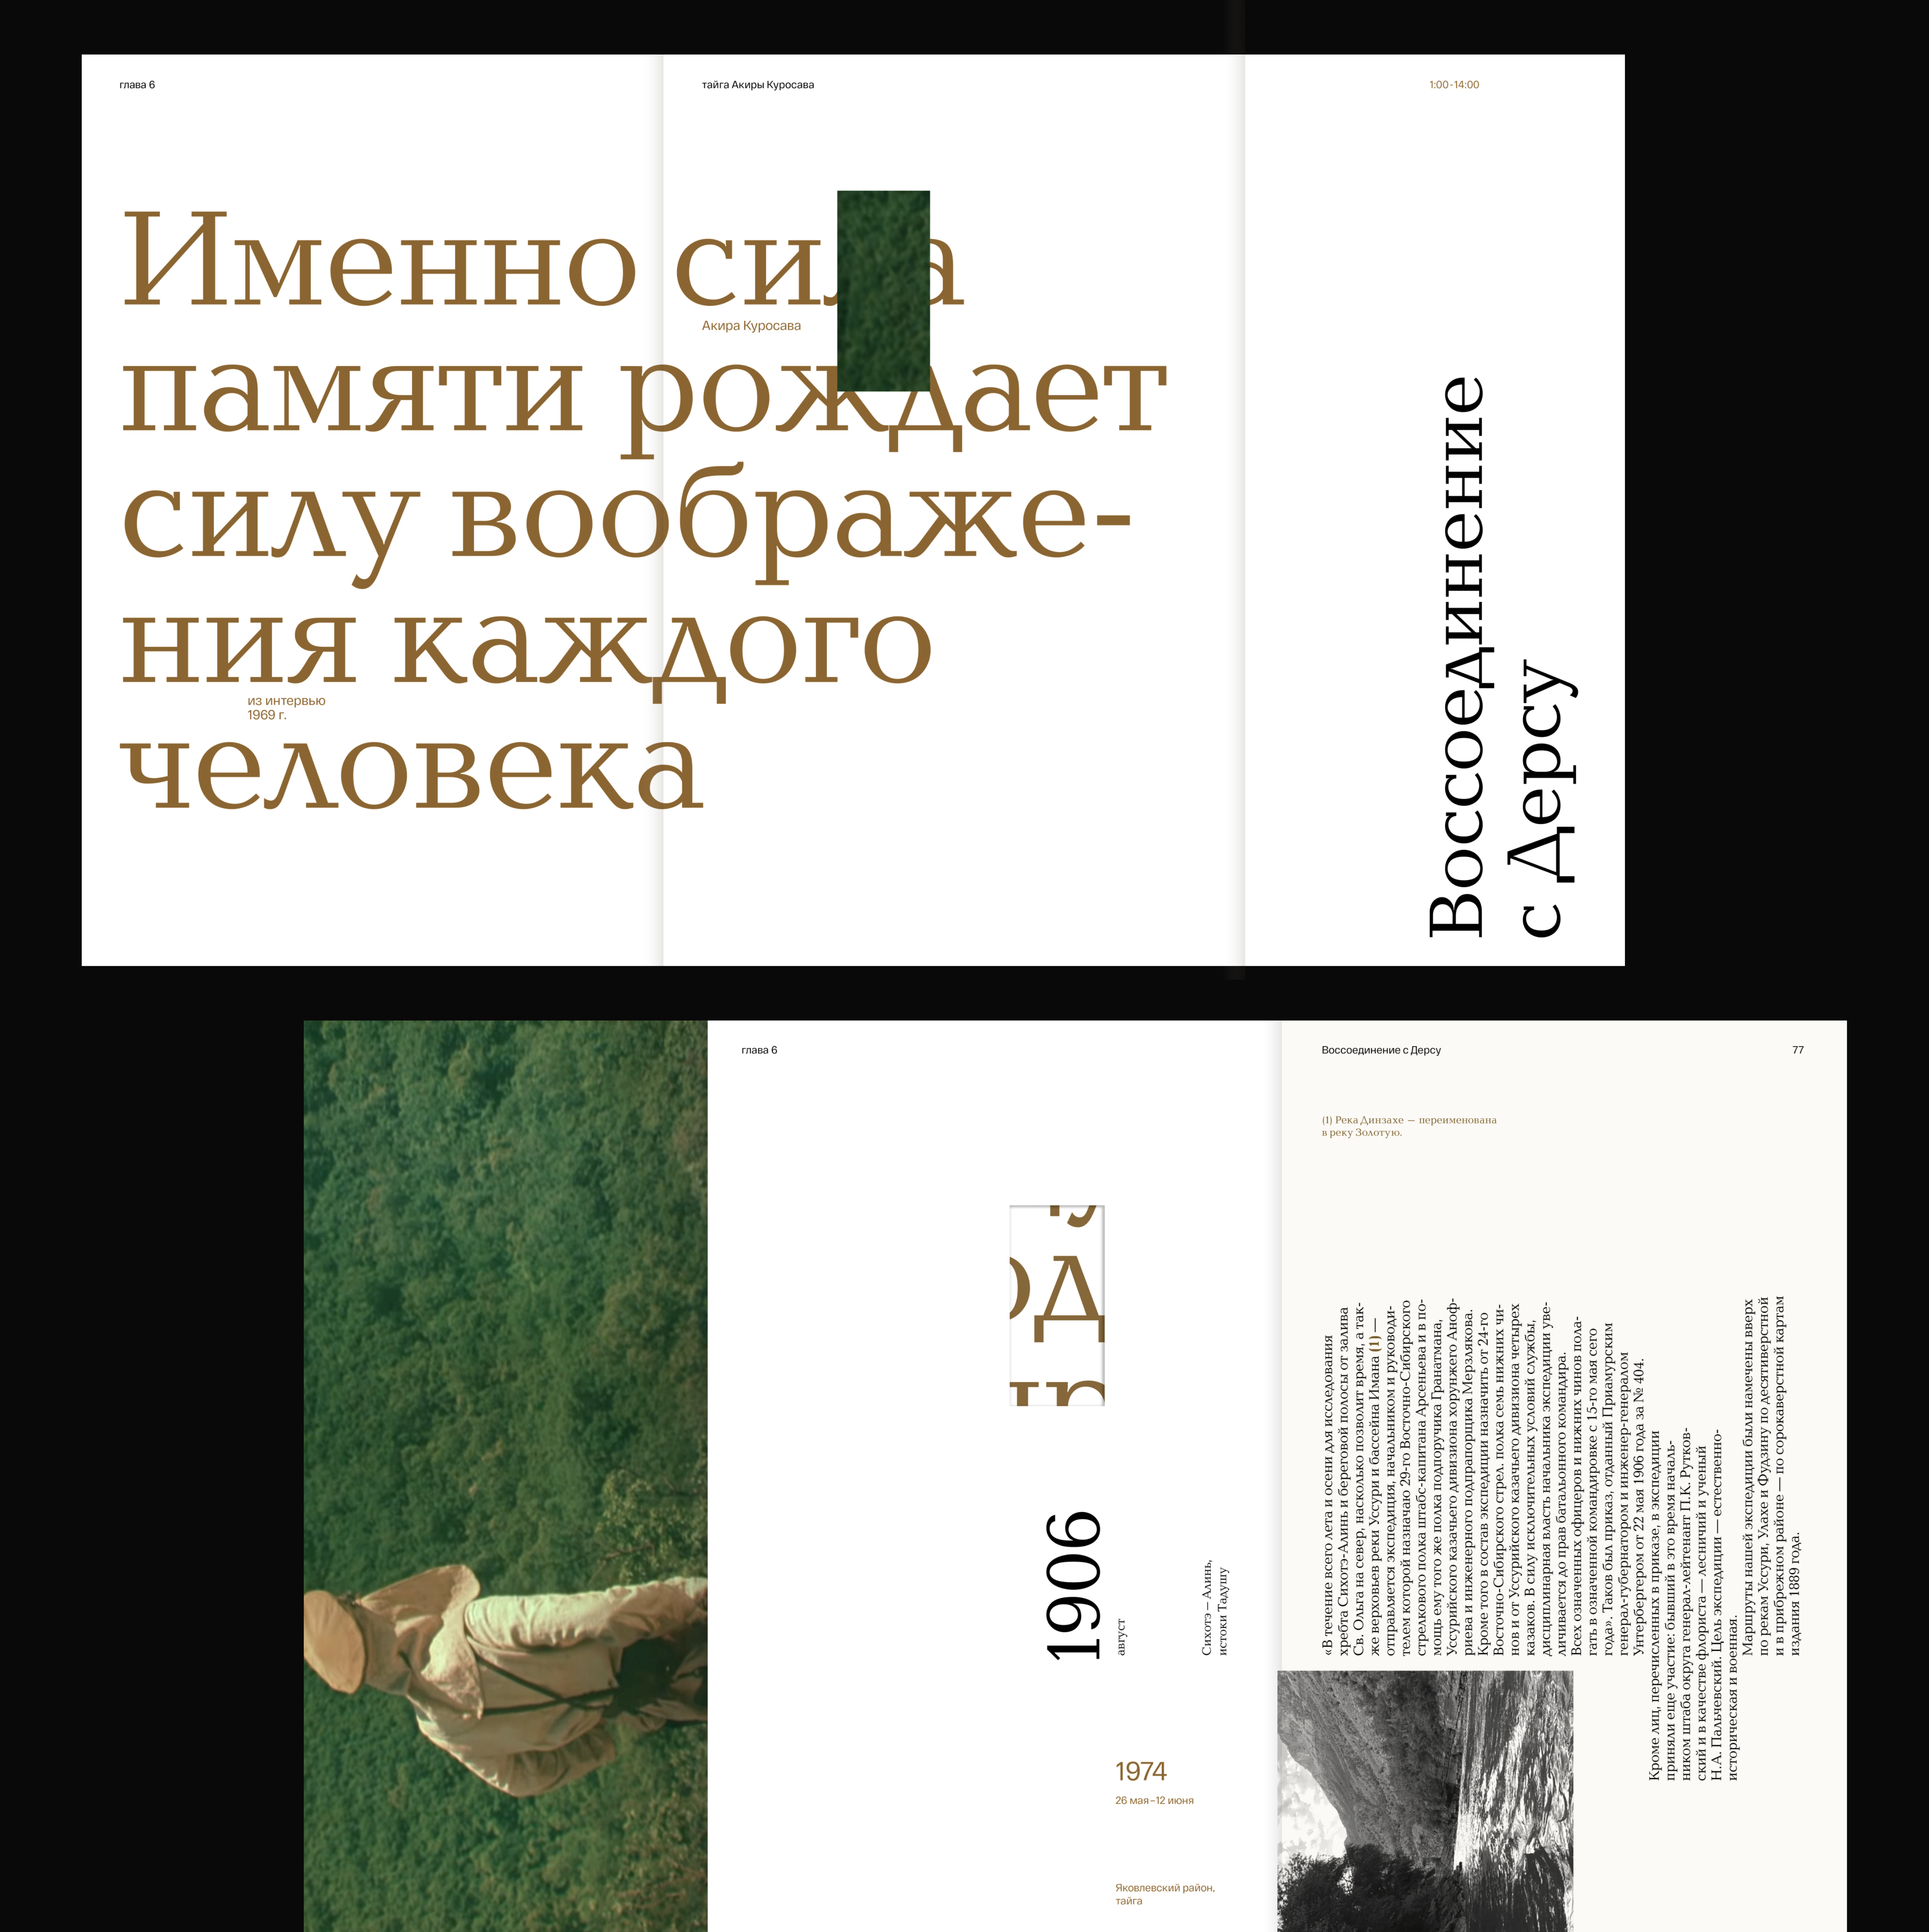 Тайга Акиры Куросава (книга) — Изображение №9 — Брендинг, Графика на Dprofile